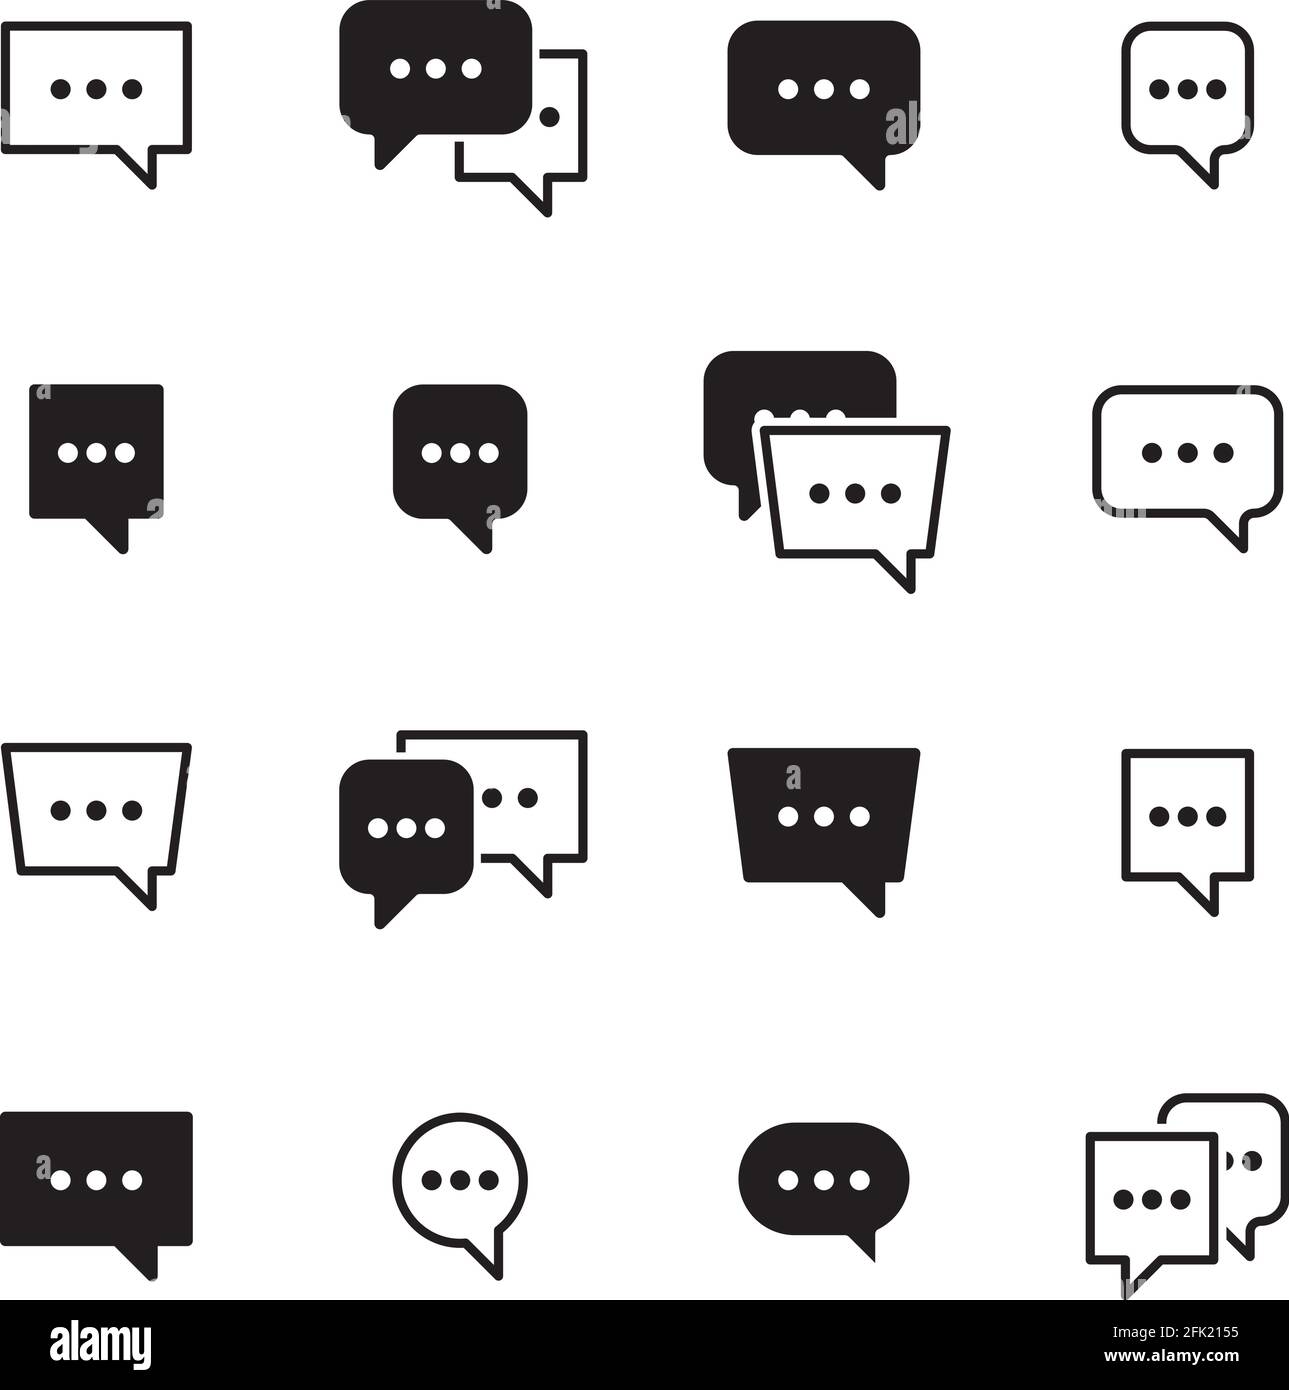 Dialogblasen. Sprechende Chat-Box-Symbole Vektor-Dialog-Piktogramm für Boten Stock Vektor